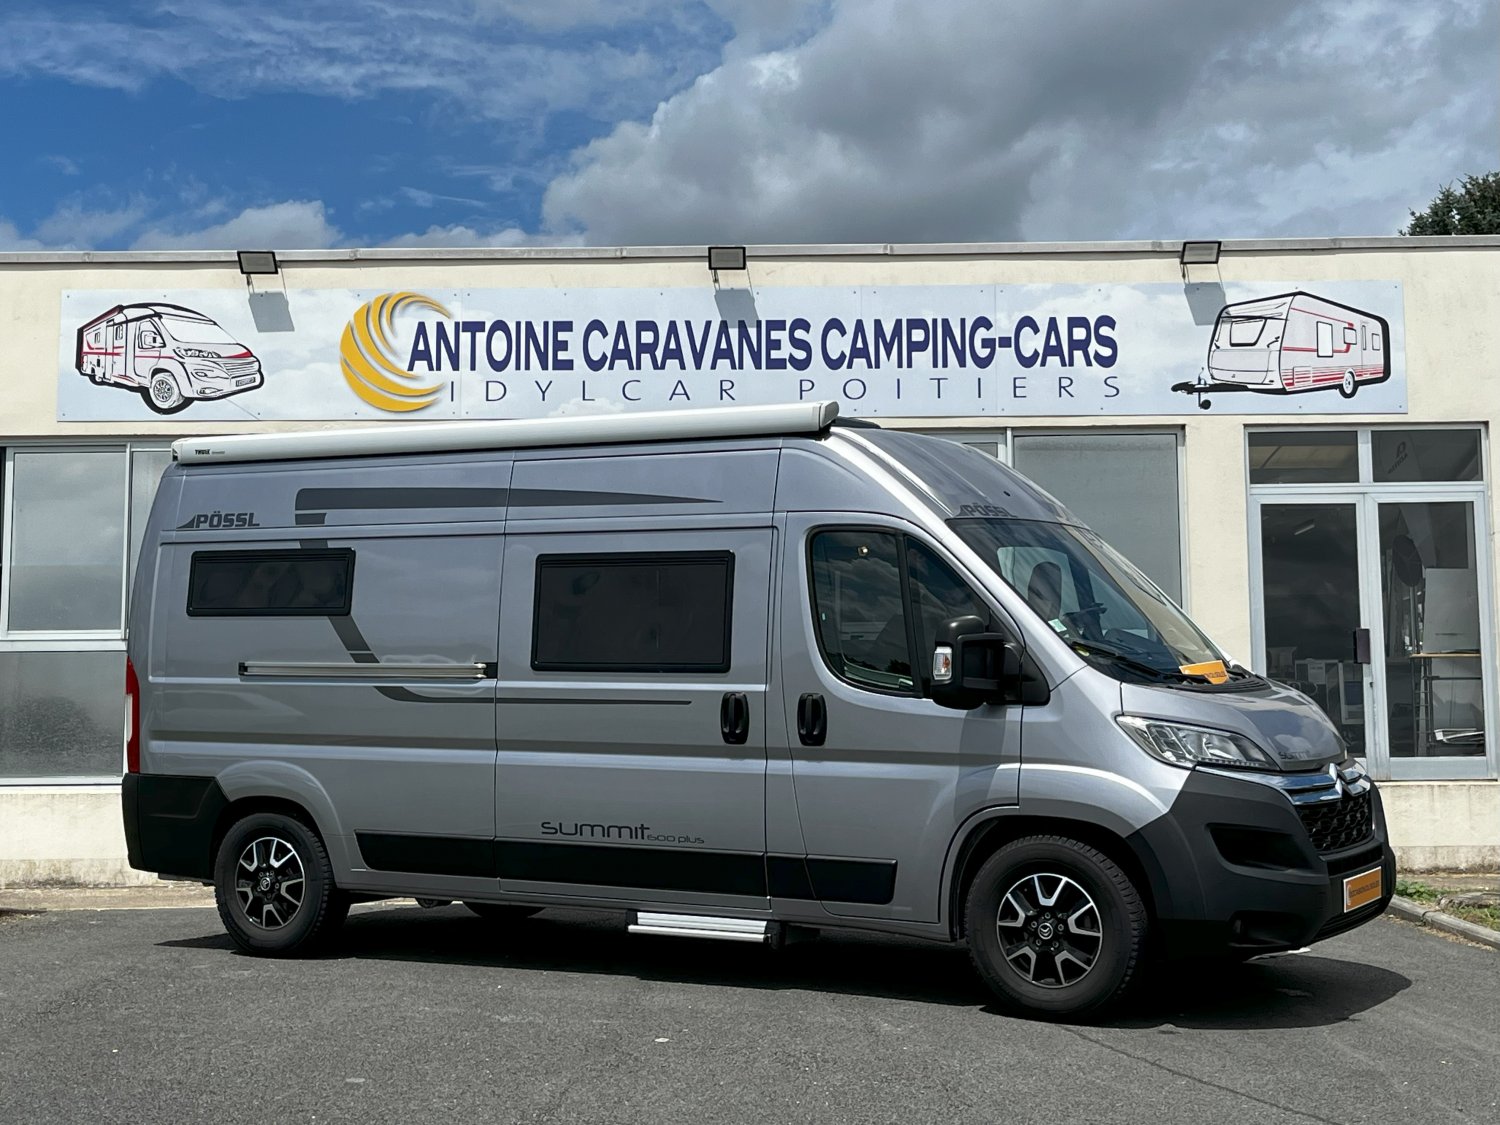 Antoine Caravanes et Camping Car - Possl Summit 600 Plus à 54 900 €€